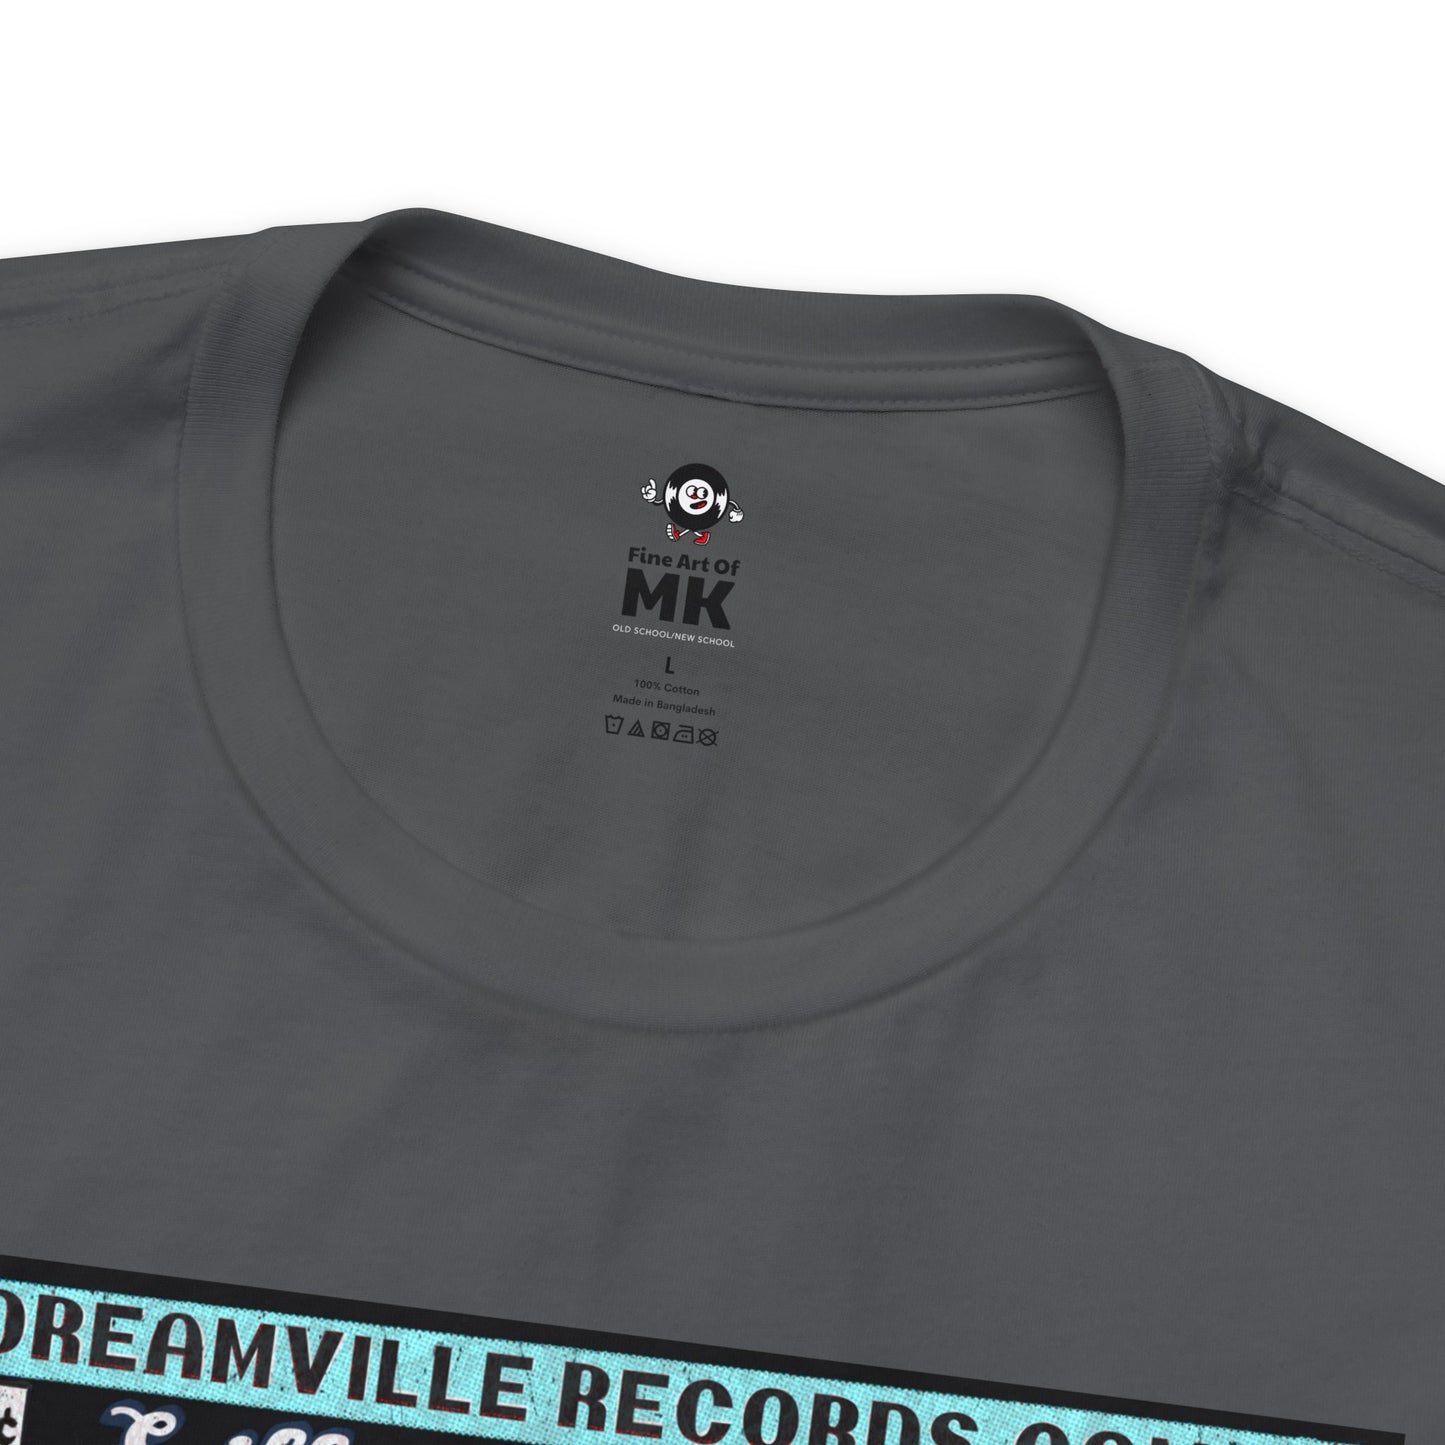 JID - Dicaprio 2 - Unisex Jersey T-Shirt